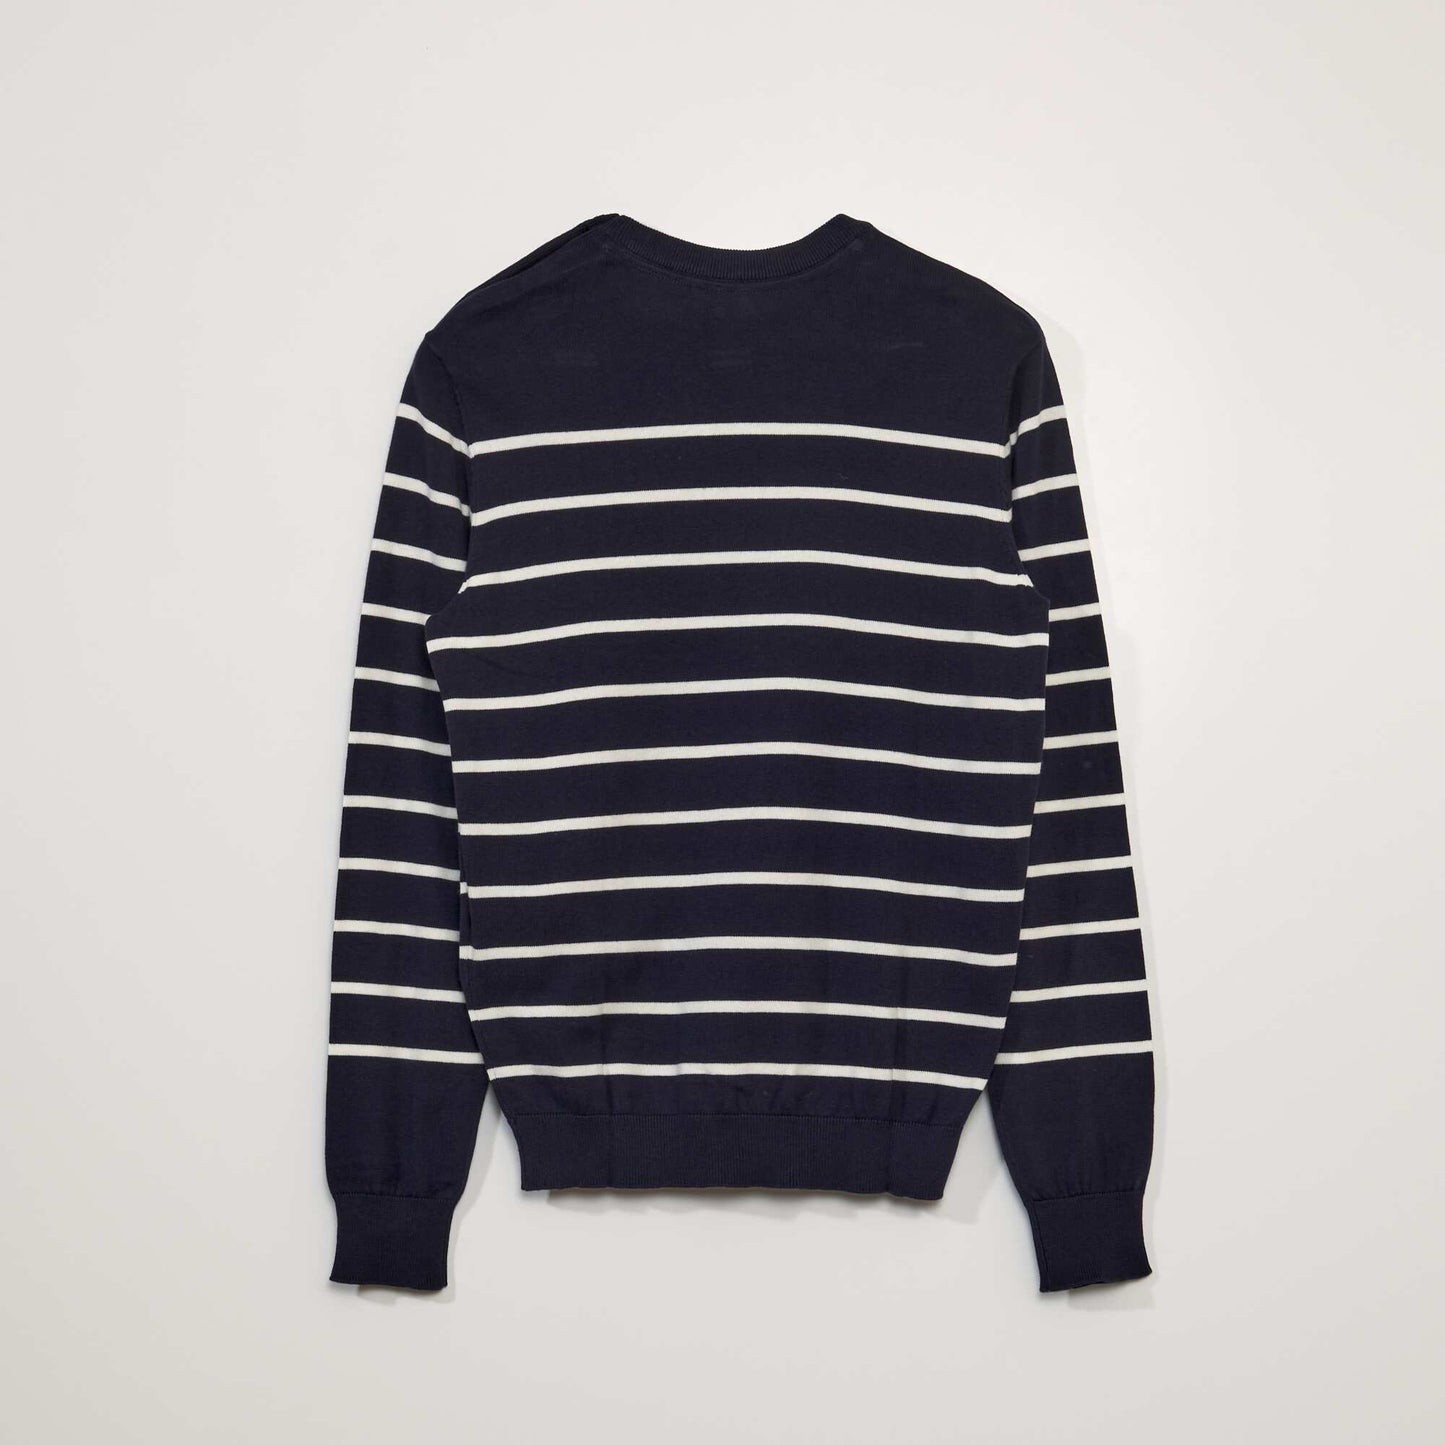 Breton style knitted sweater BLUE STRIPE